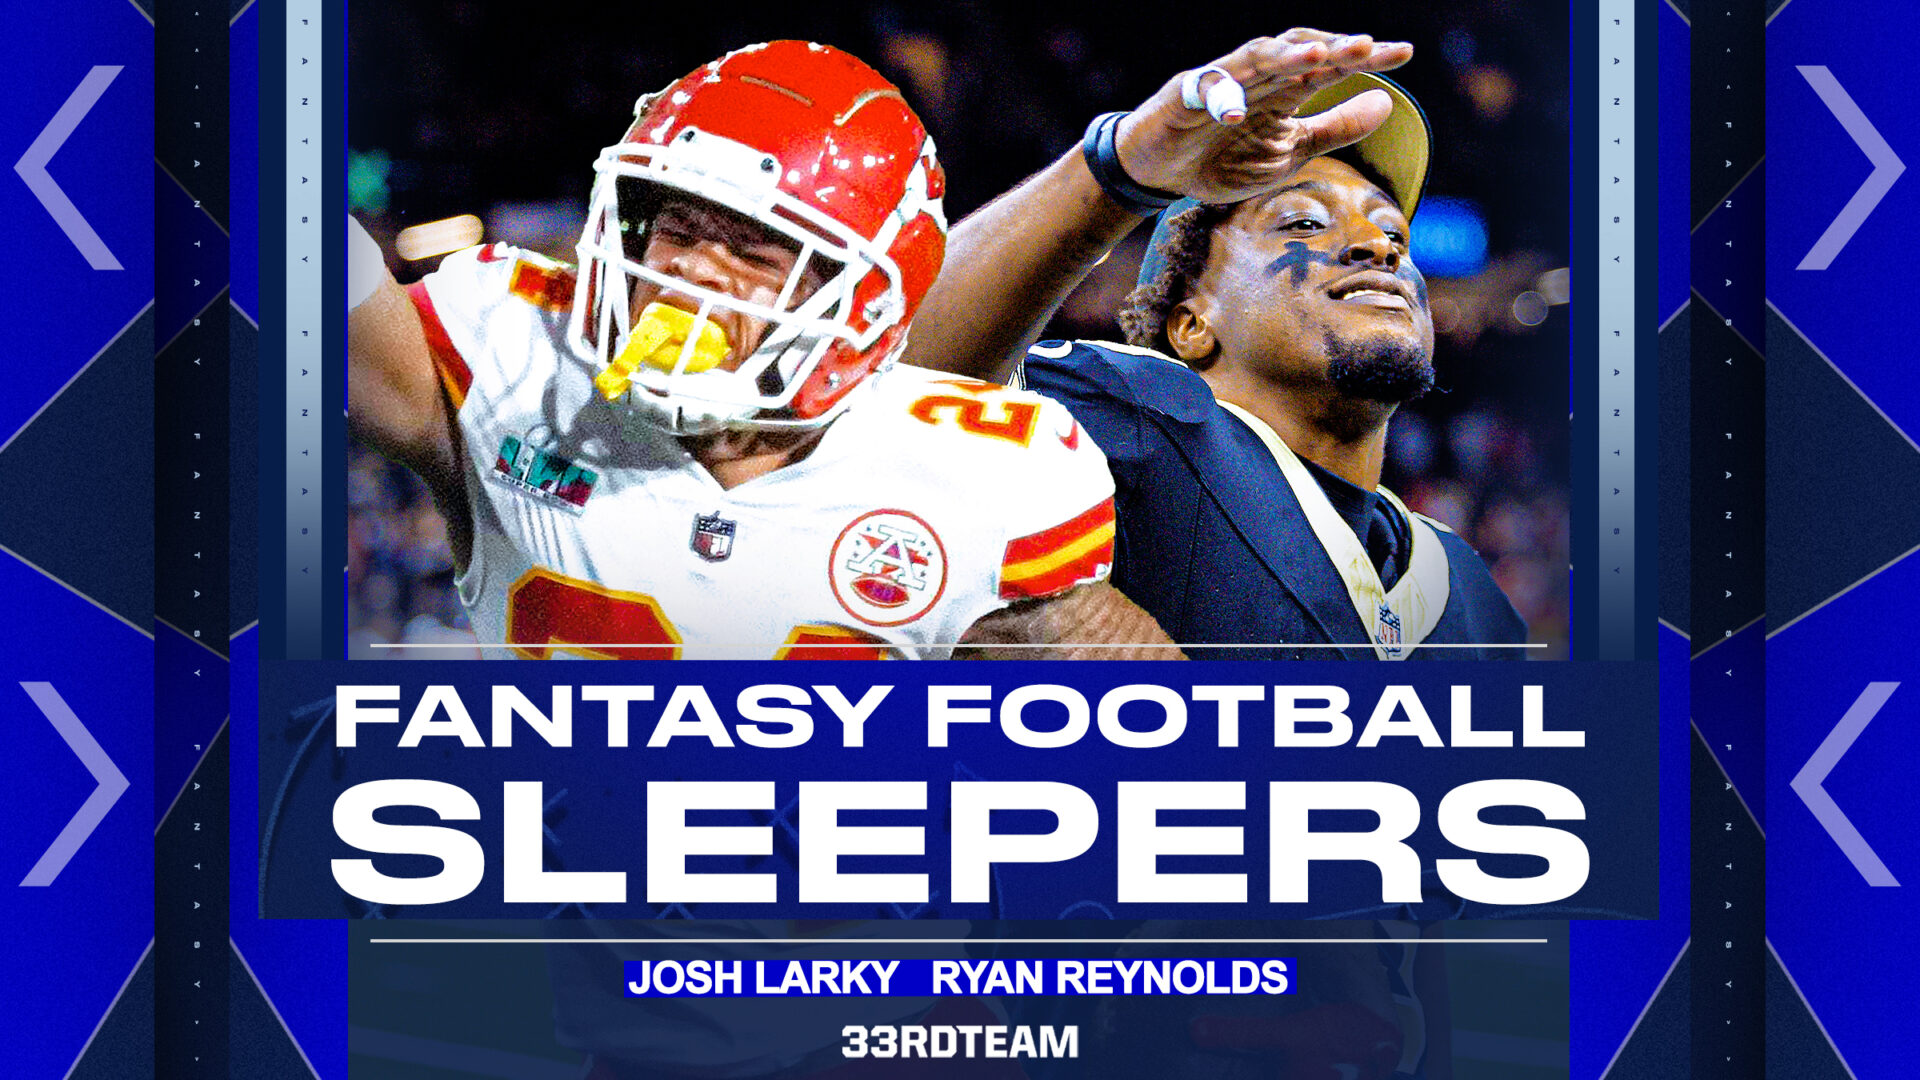 10 Fantasy Football Sleepers for the 2022 NFL Season